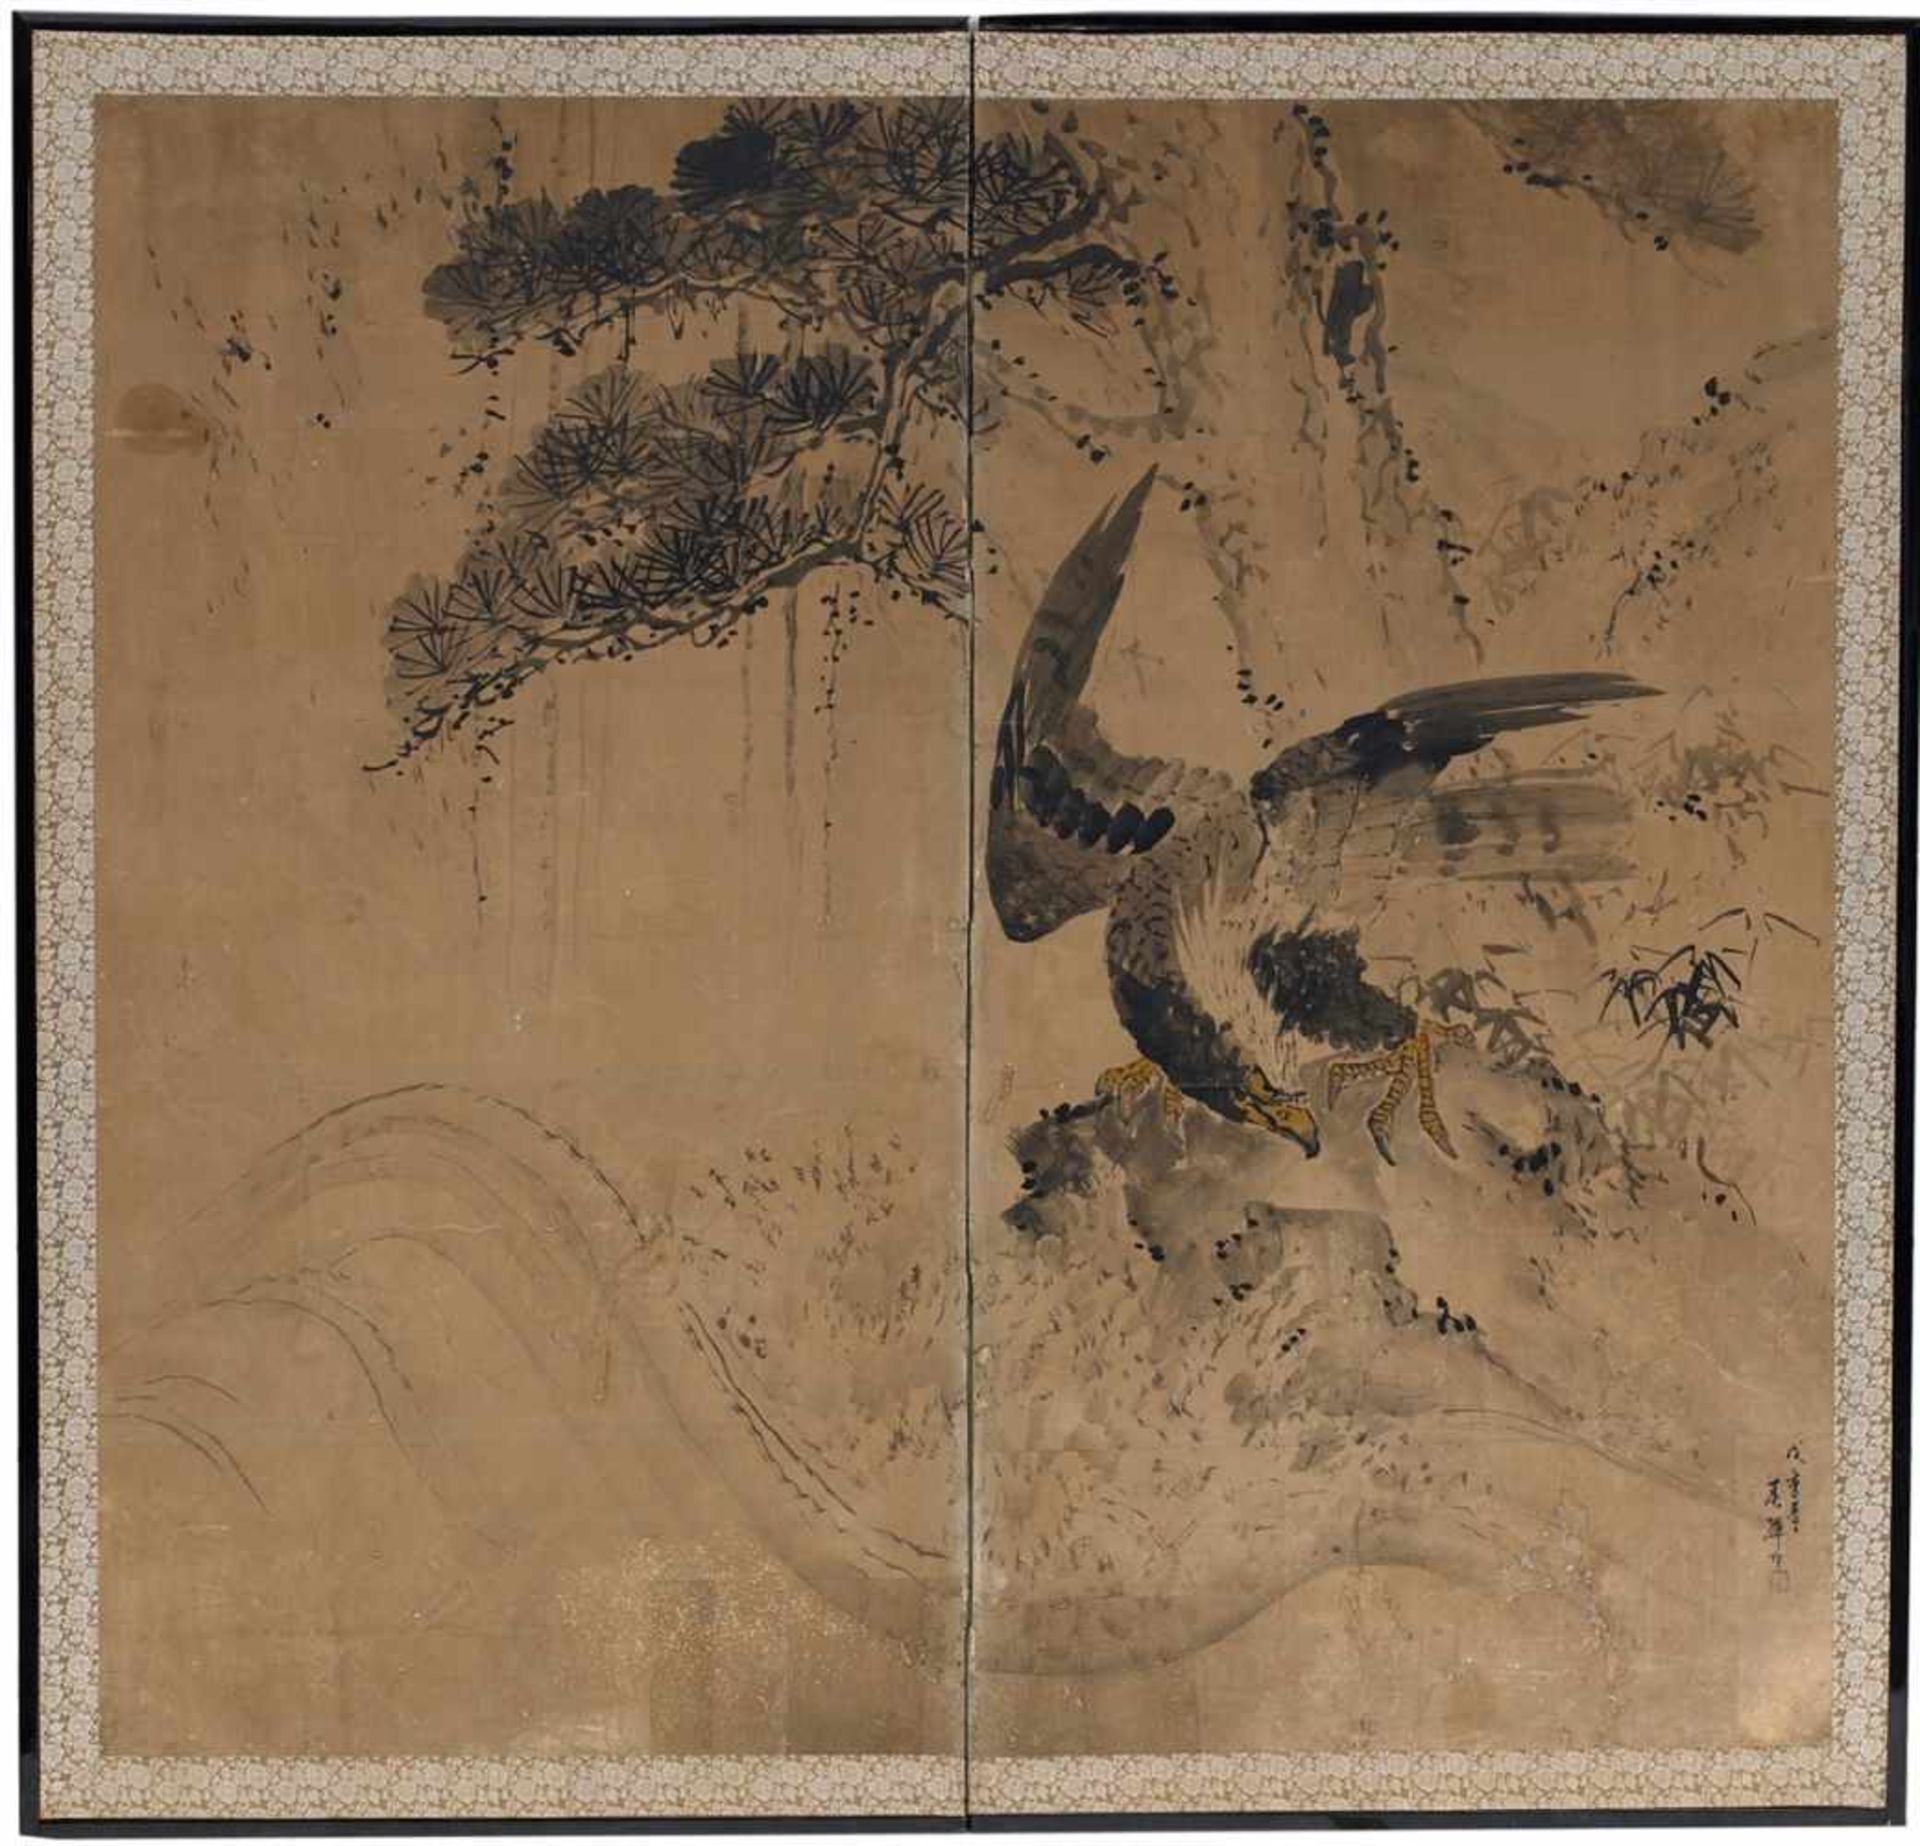 Shunki. 19th century